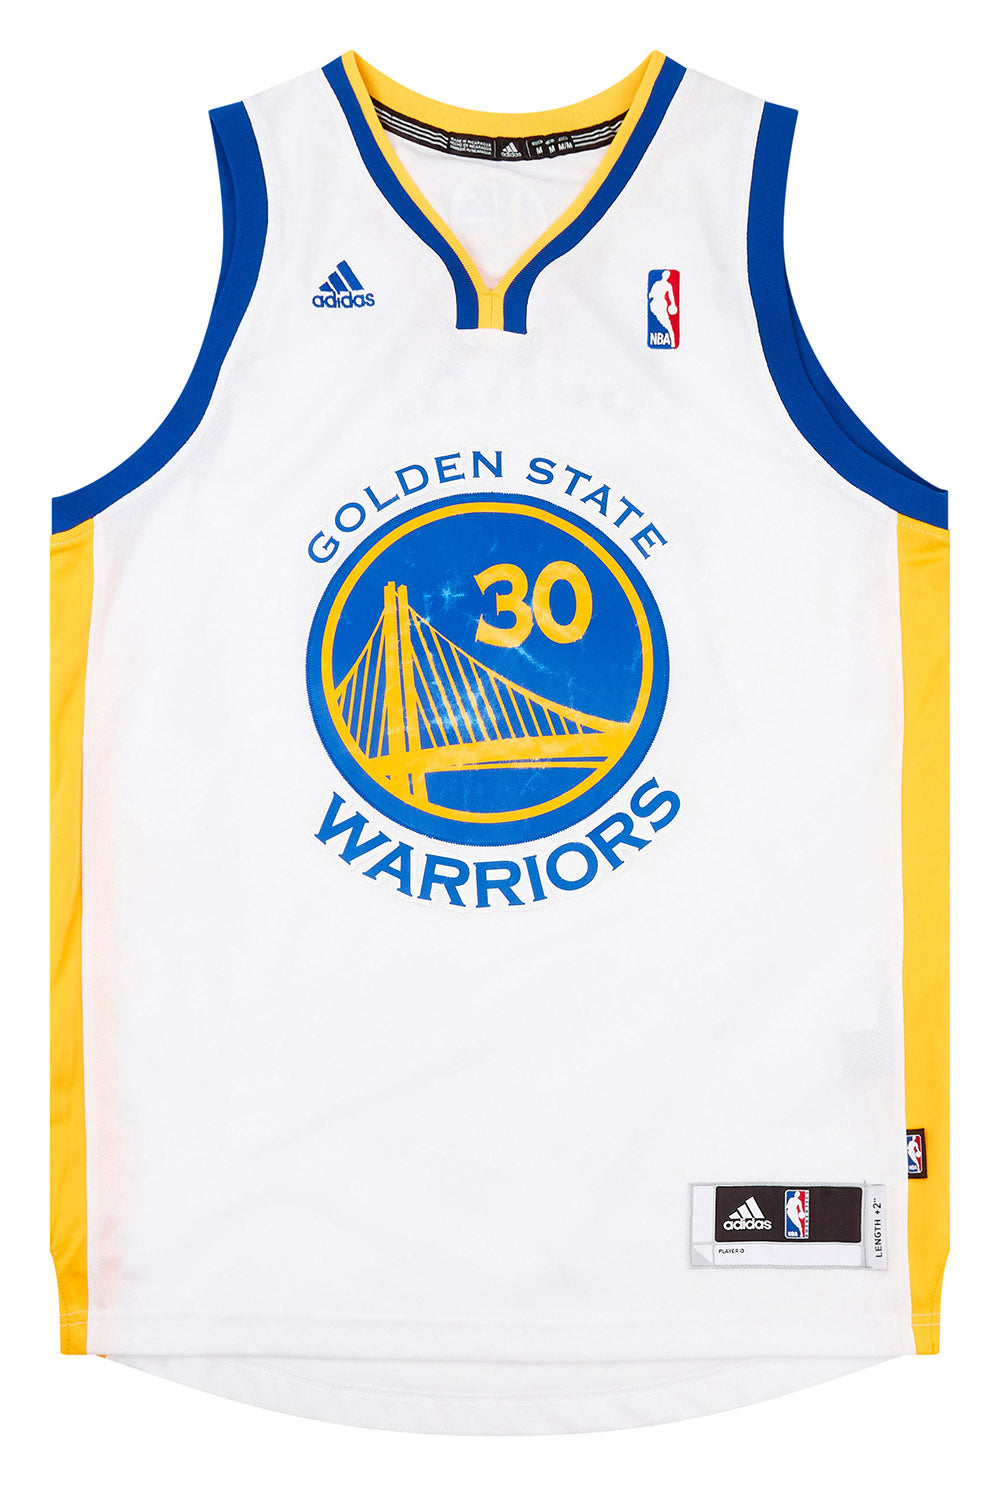 2022-23 Golden State Warriors Curry #30 Nike Swingman Alternate Jersey  (XL.Kids)